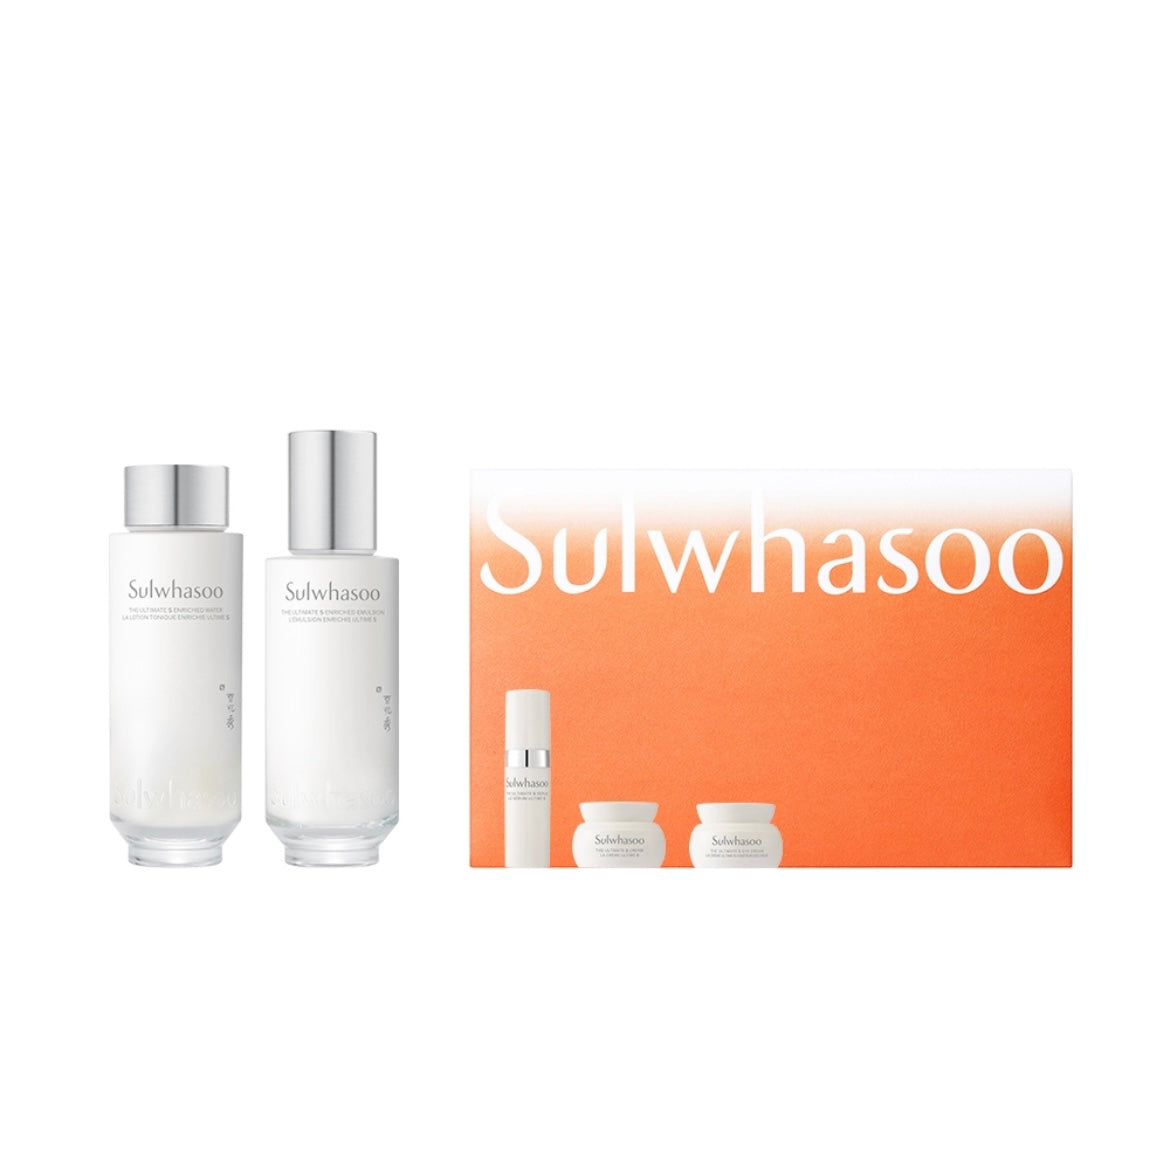 Sulwhasoo Timetreasure Skincare Set (2 Items)